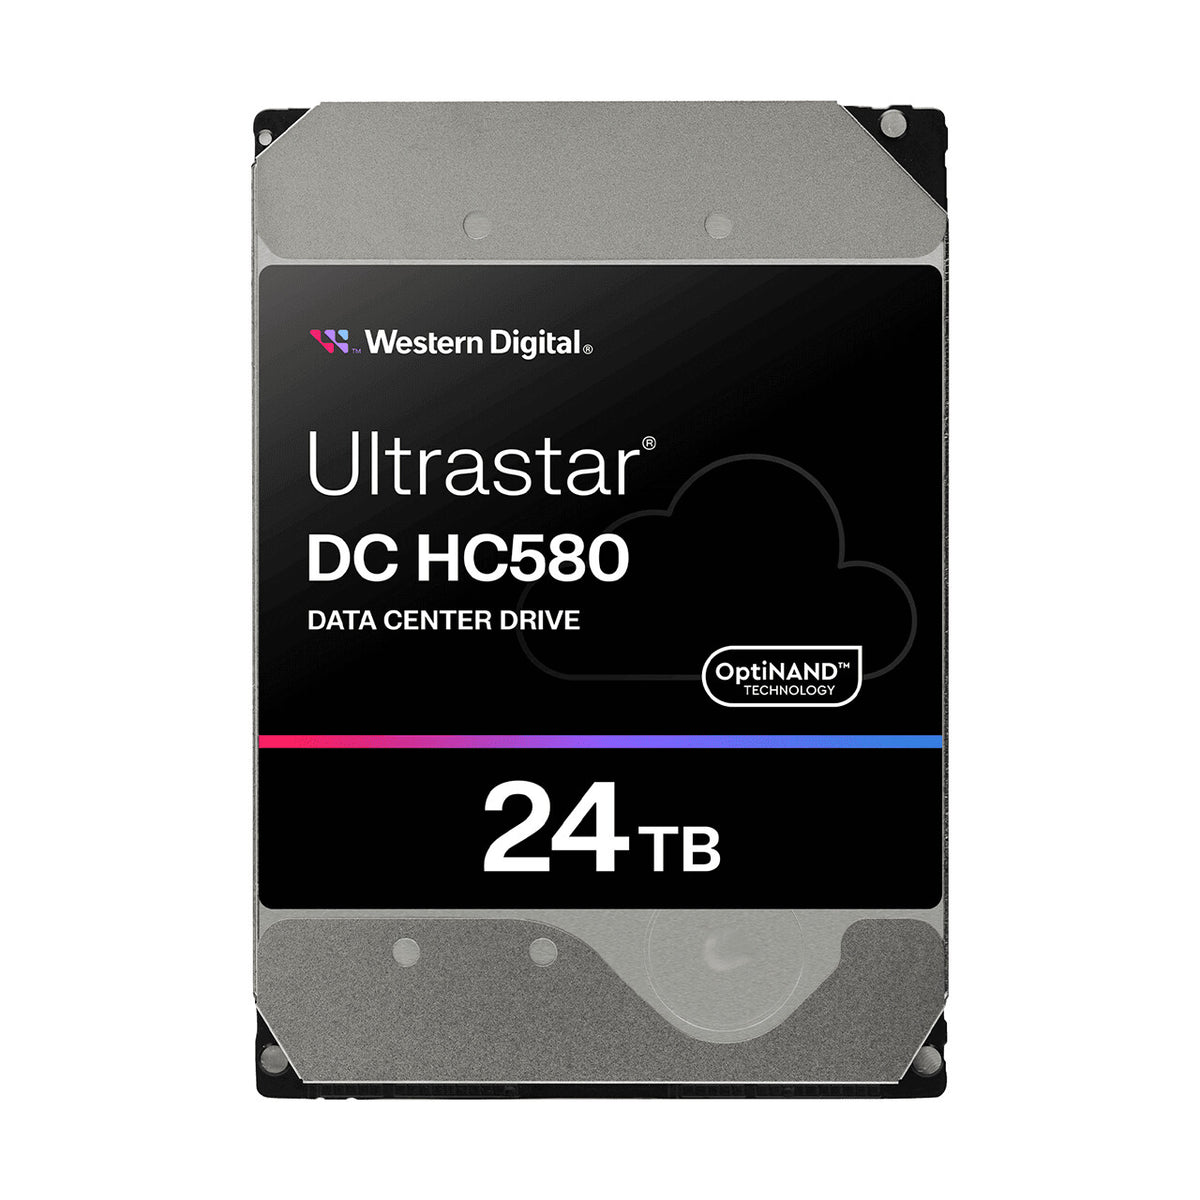 Western Digital Ultrastar DC HC580 -  7.2K RPM Serial ATA 3.5&quot; HDD - 24 TB